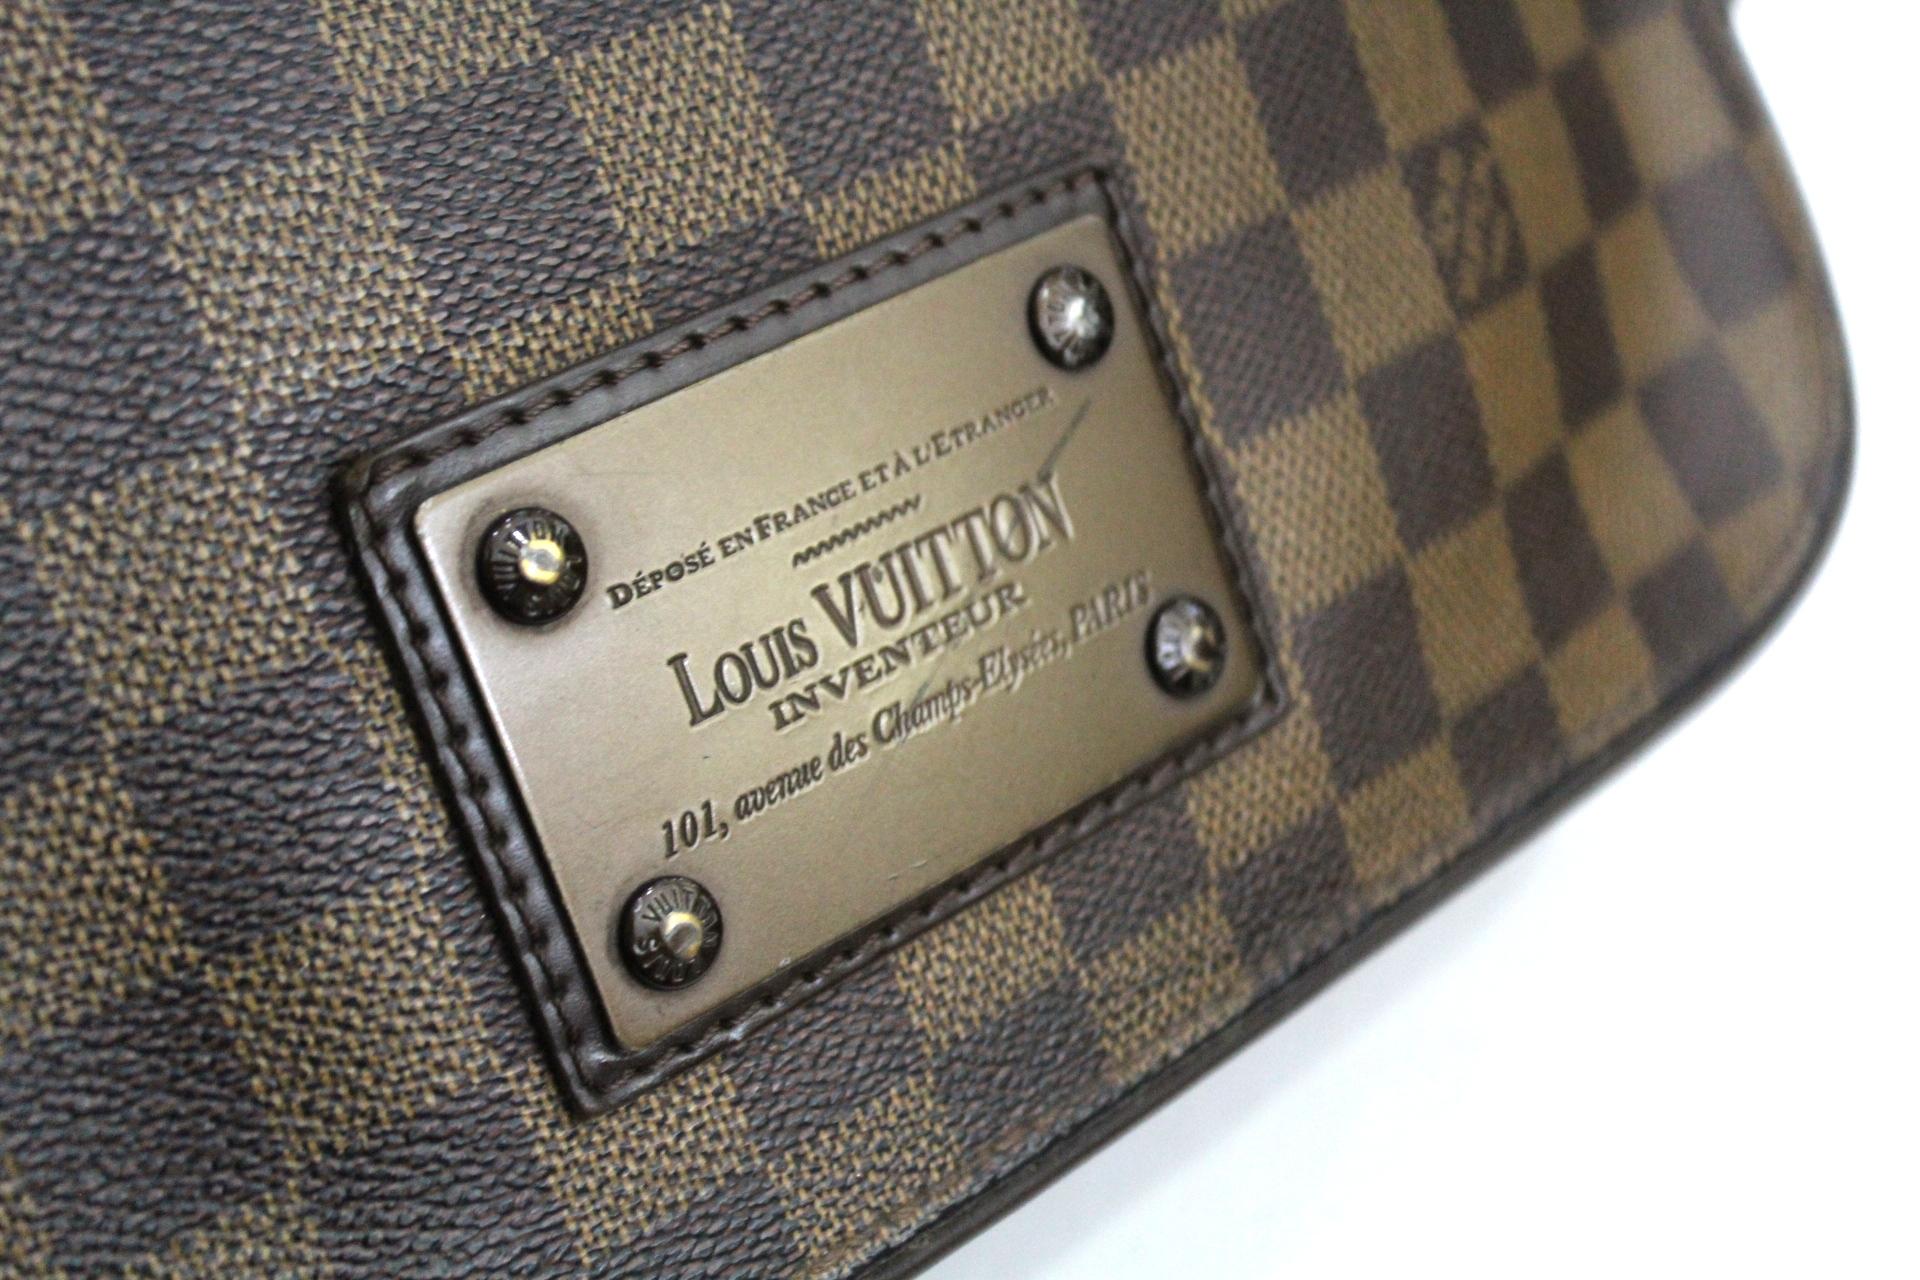 Louis Vuitton Brooklyn MM Damier Ebene Messenger Bag Discontinued at 1stDibs